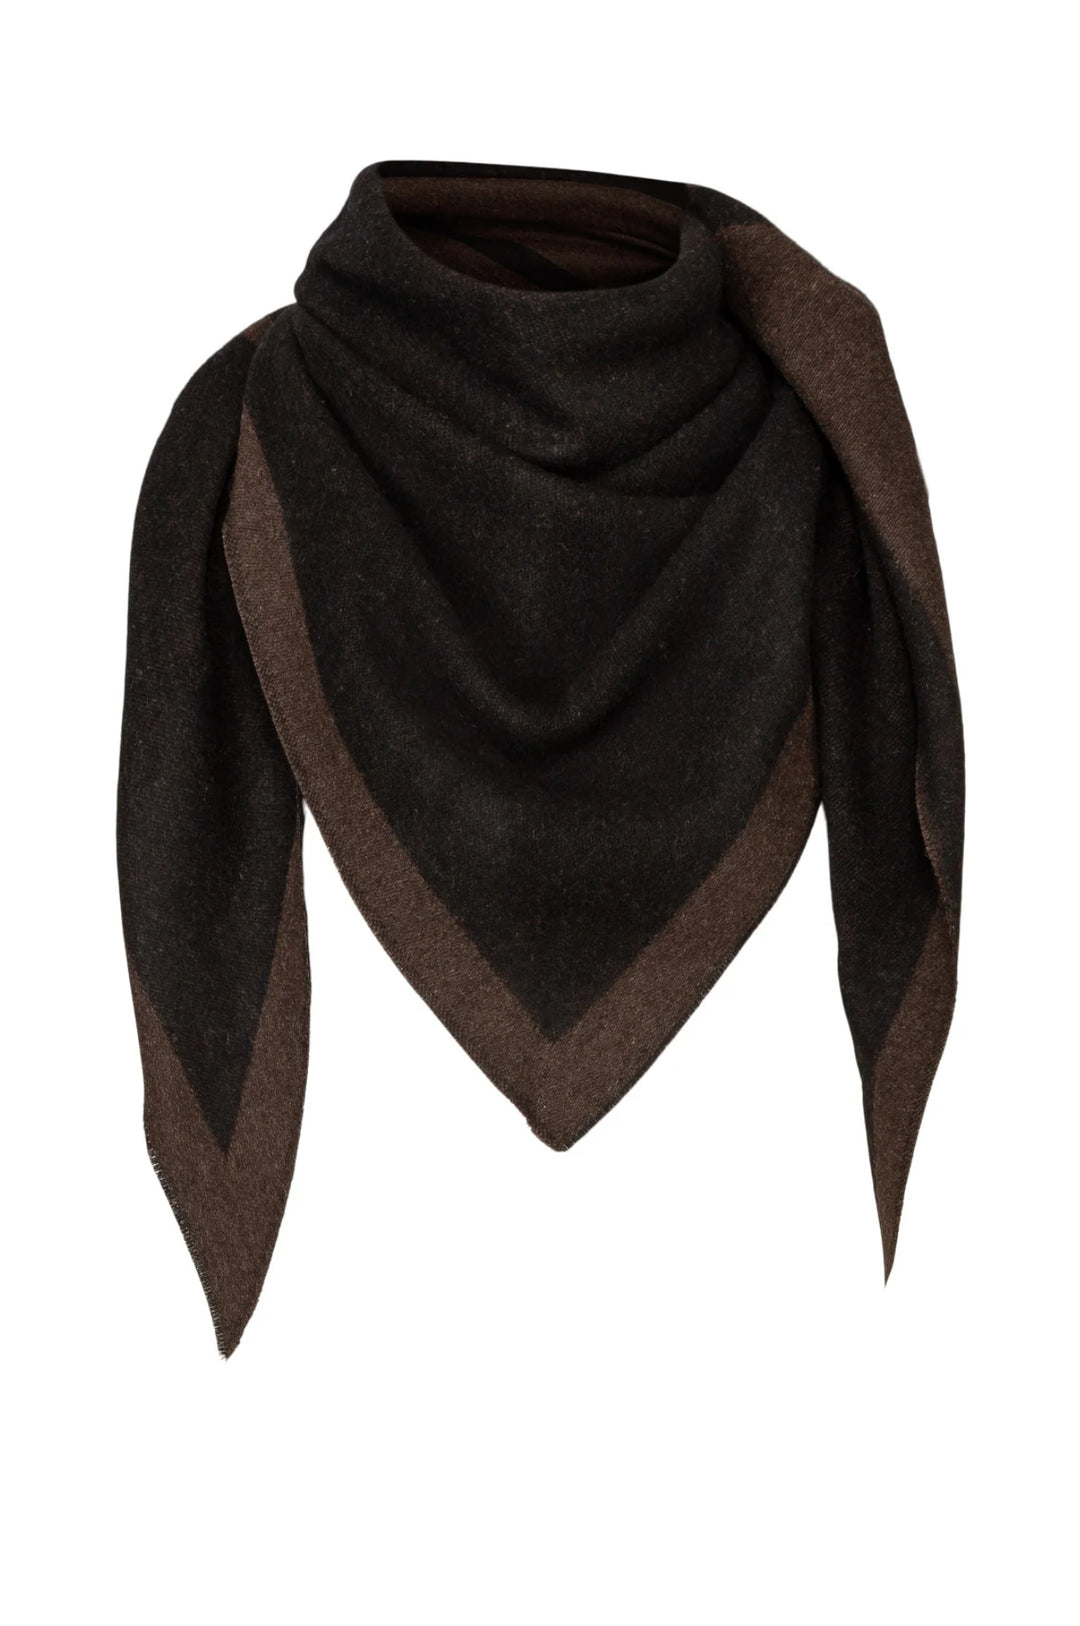 Triangle scarf - Wool & cashmere - Tobacco / Black-Envelope1976-Bogartstore